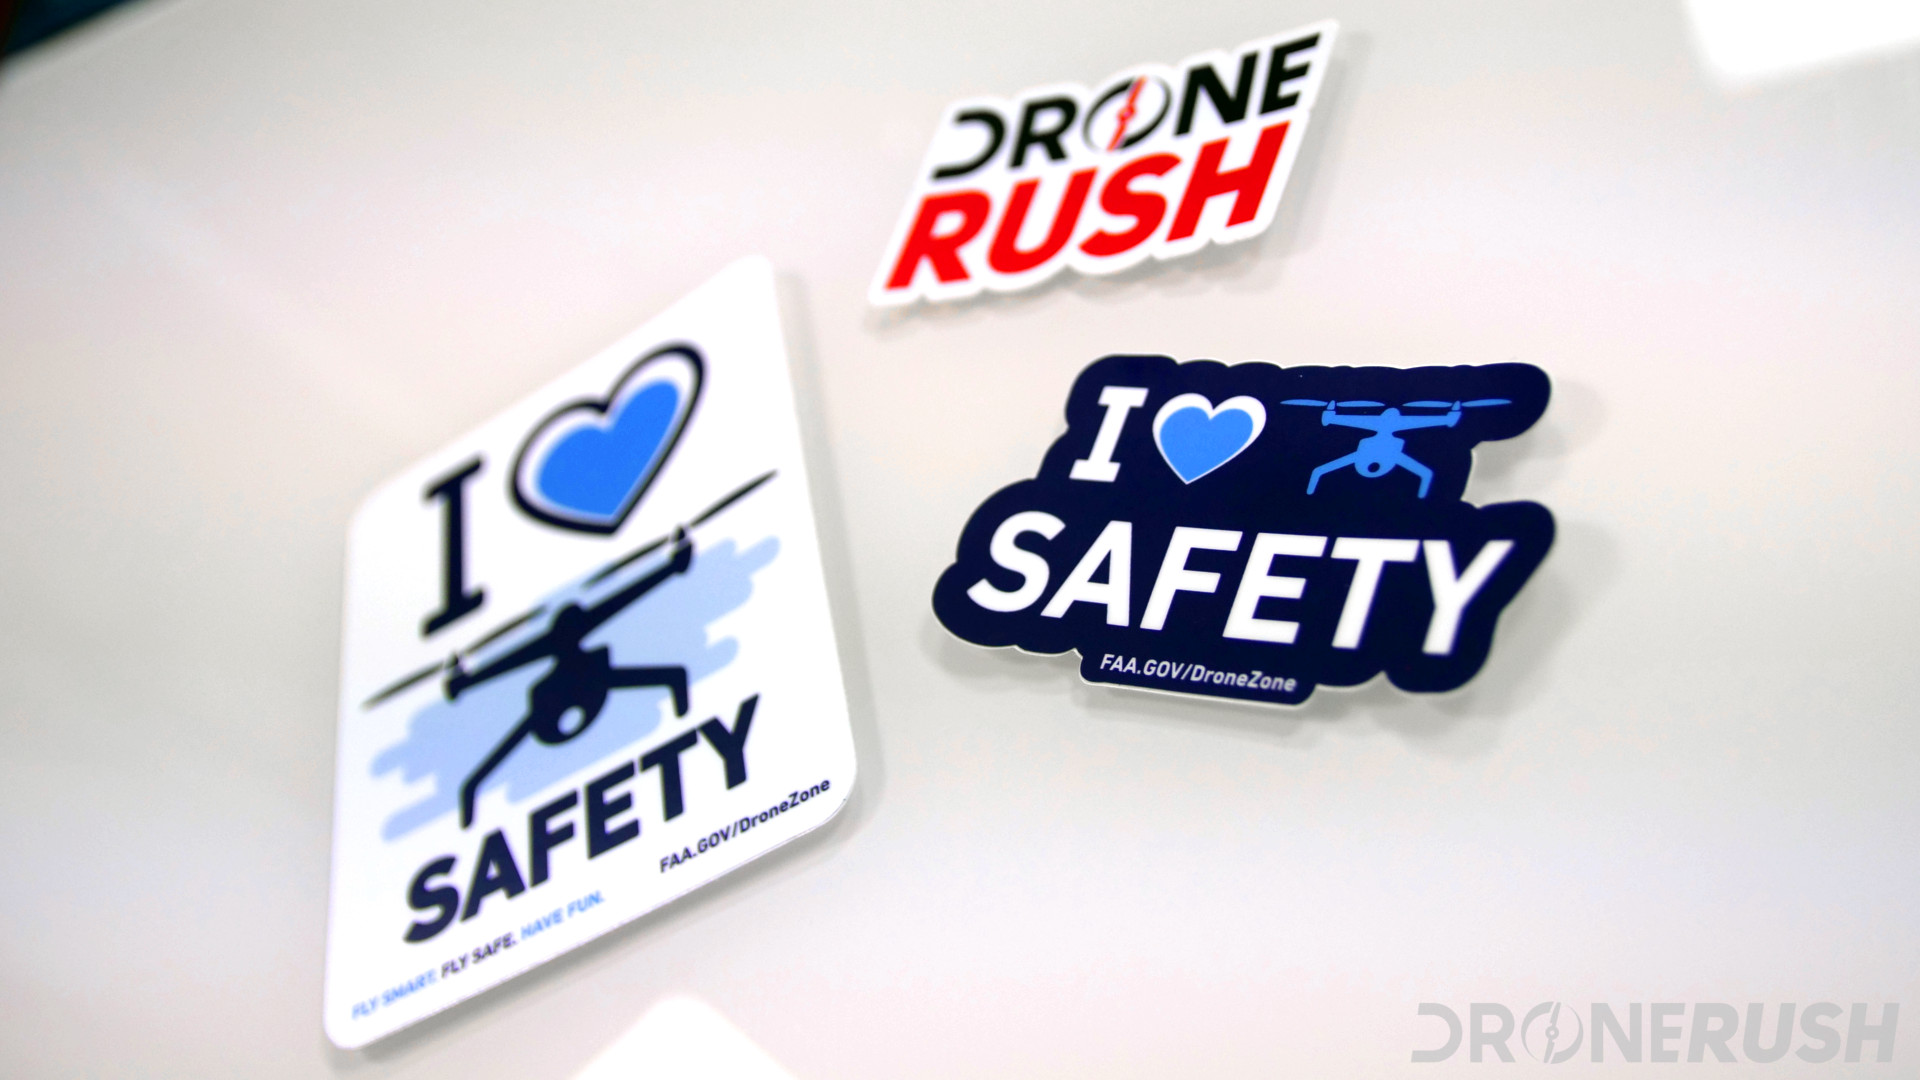 Drone Rush FAA love drone safety